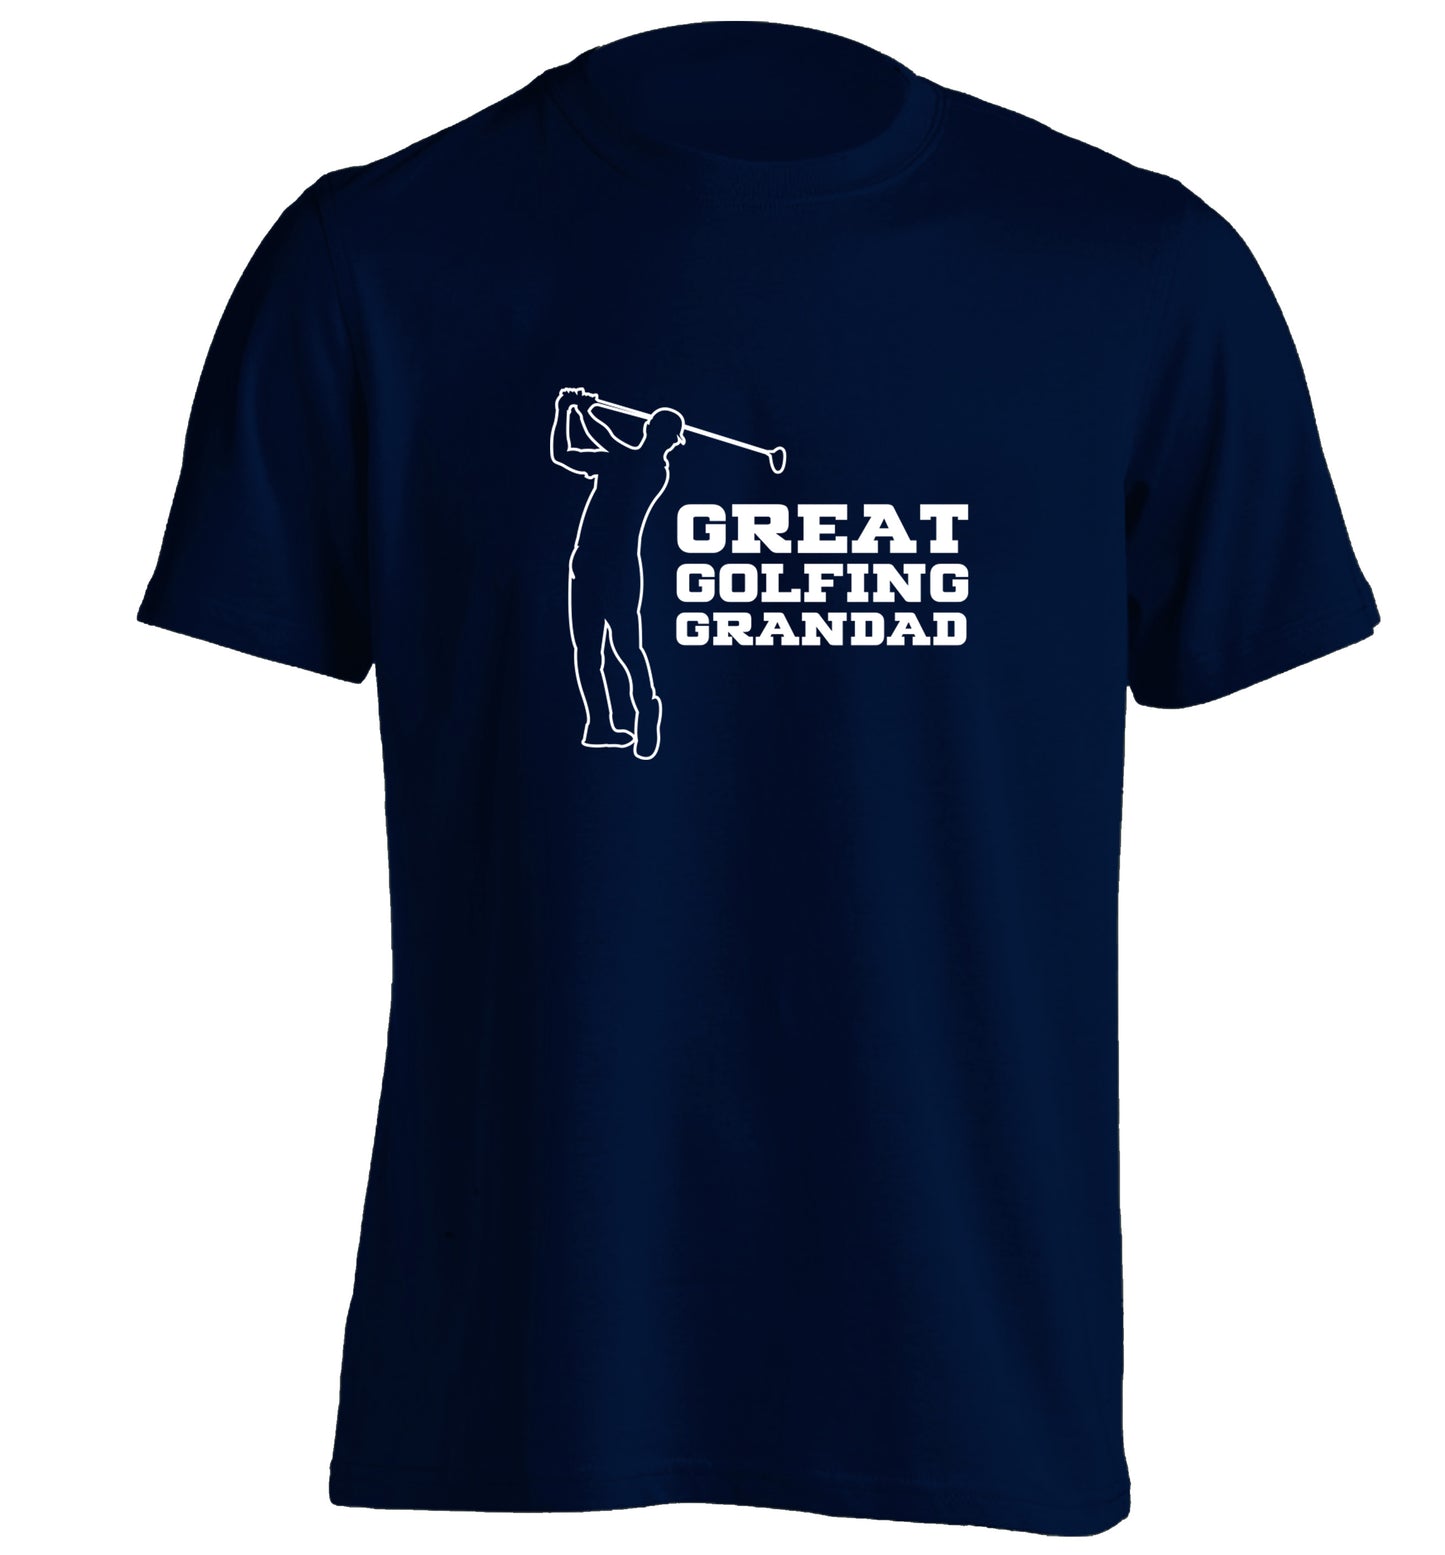 Great Golfing Grandad adults unisex navy Tshirt 2XL